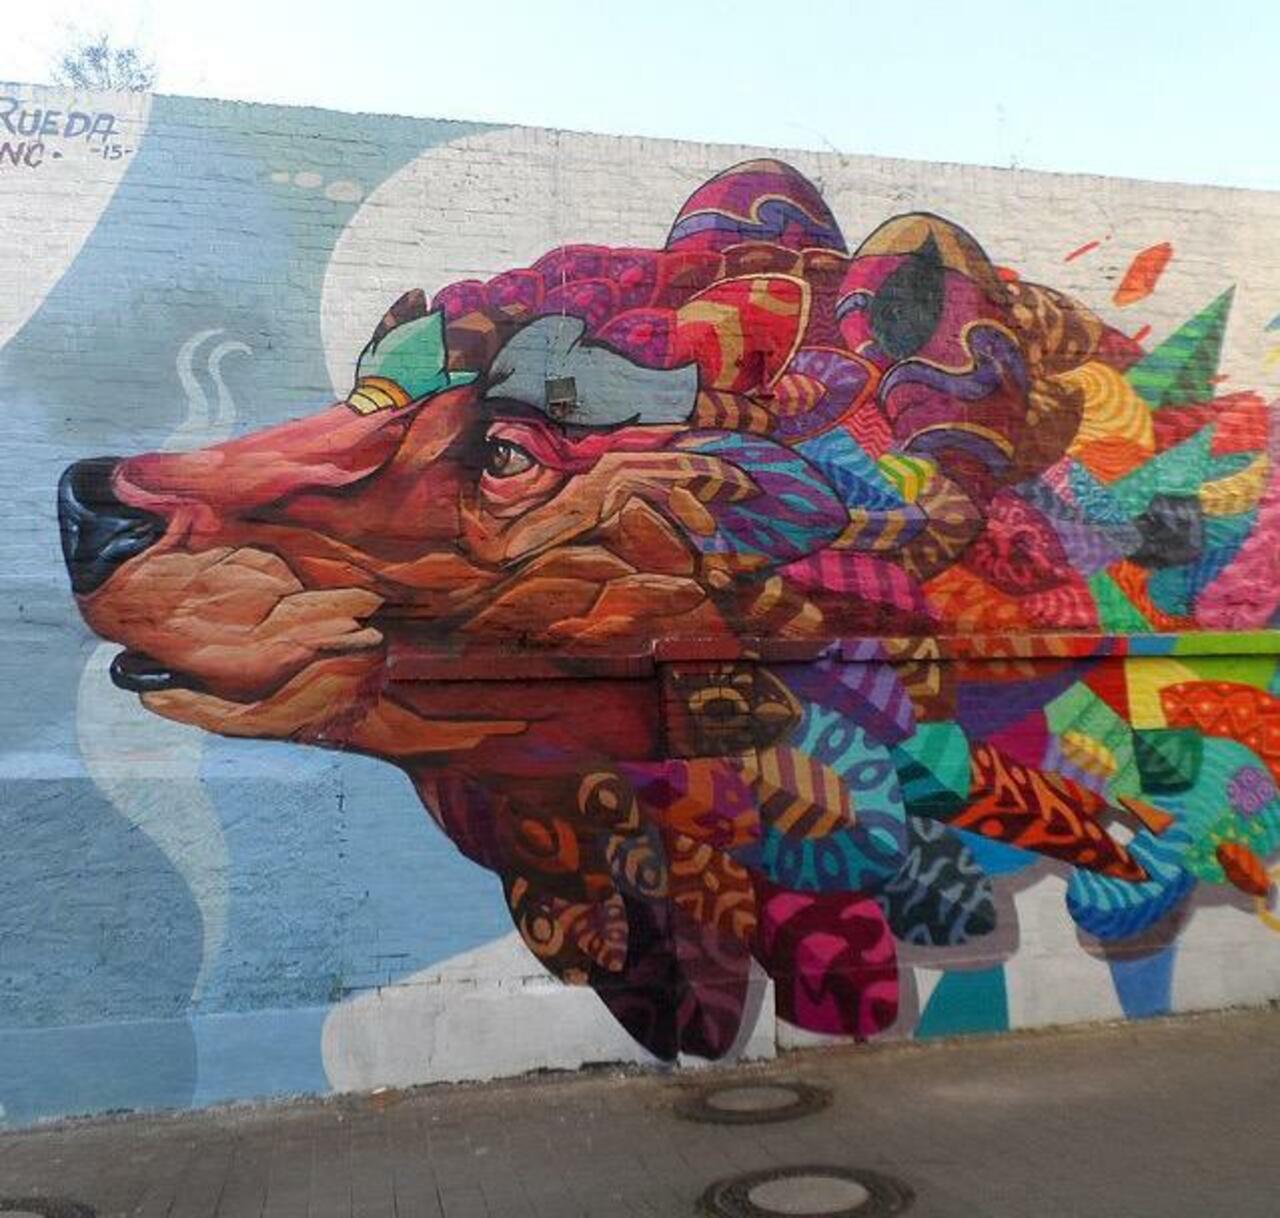 Farid Rueda Street Art 

#art #graffiti #mural #streetart http://t.co/s2IZP0QTsP